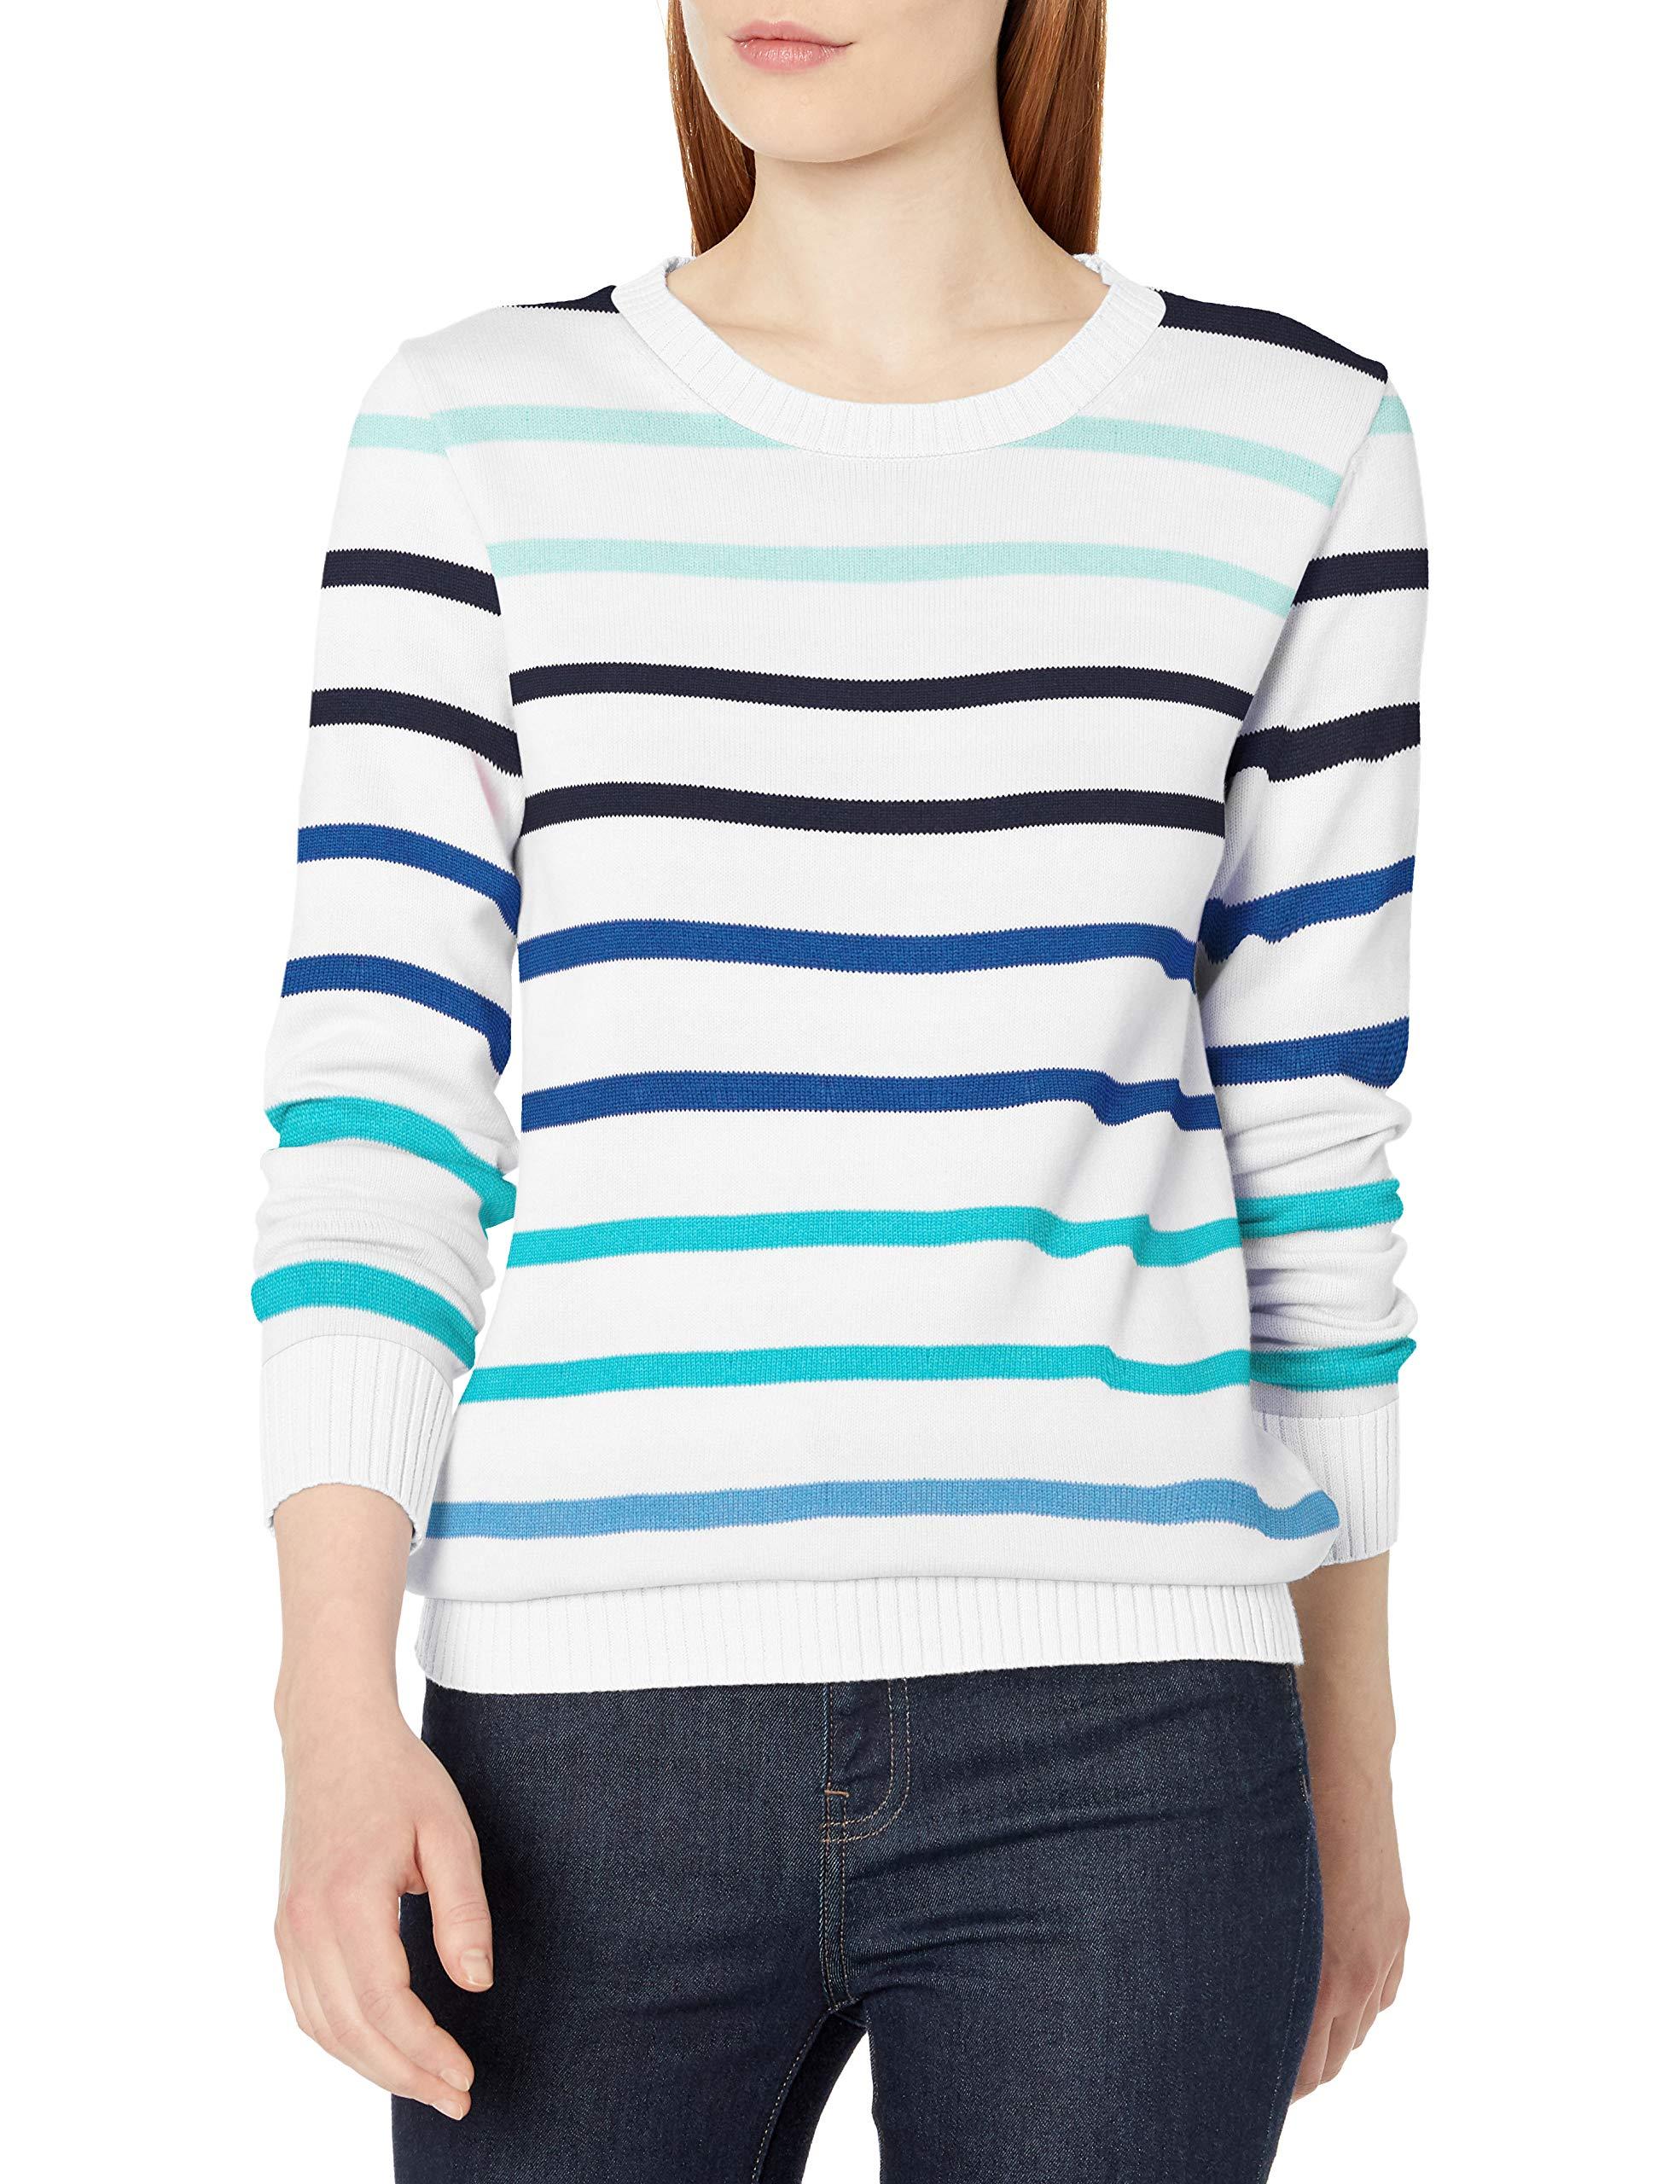 Amazon Essentials 100% Cotton Crewneck Sweater in Blue - Lyst